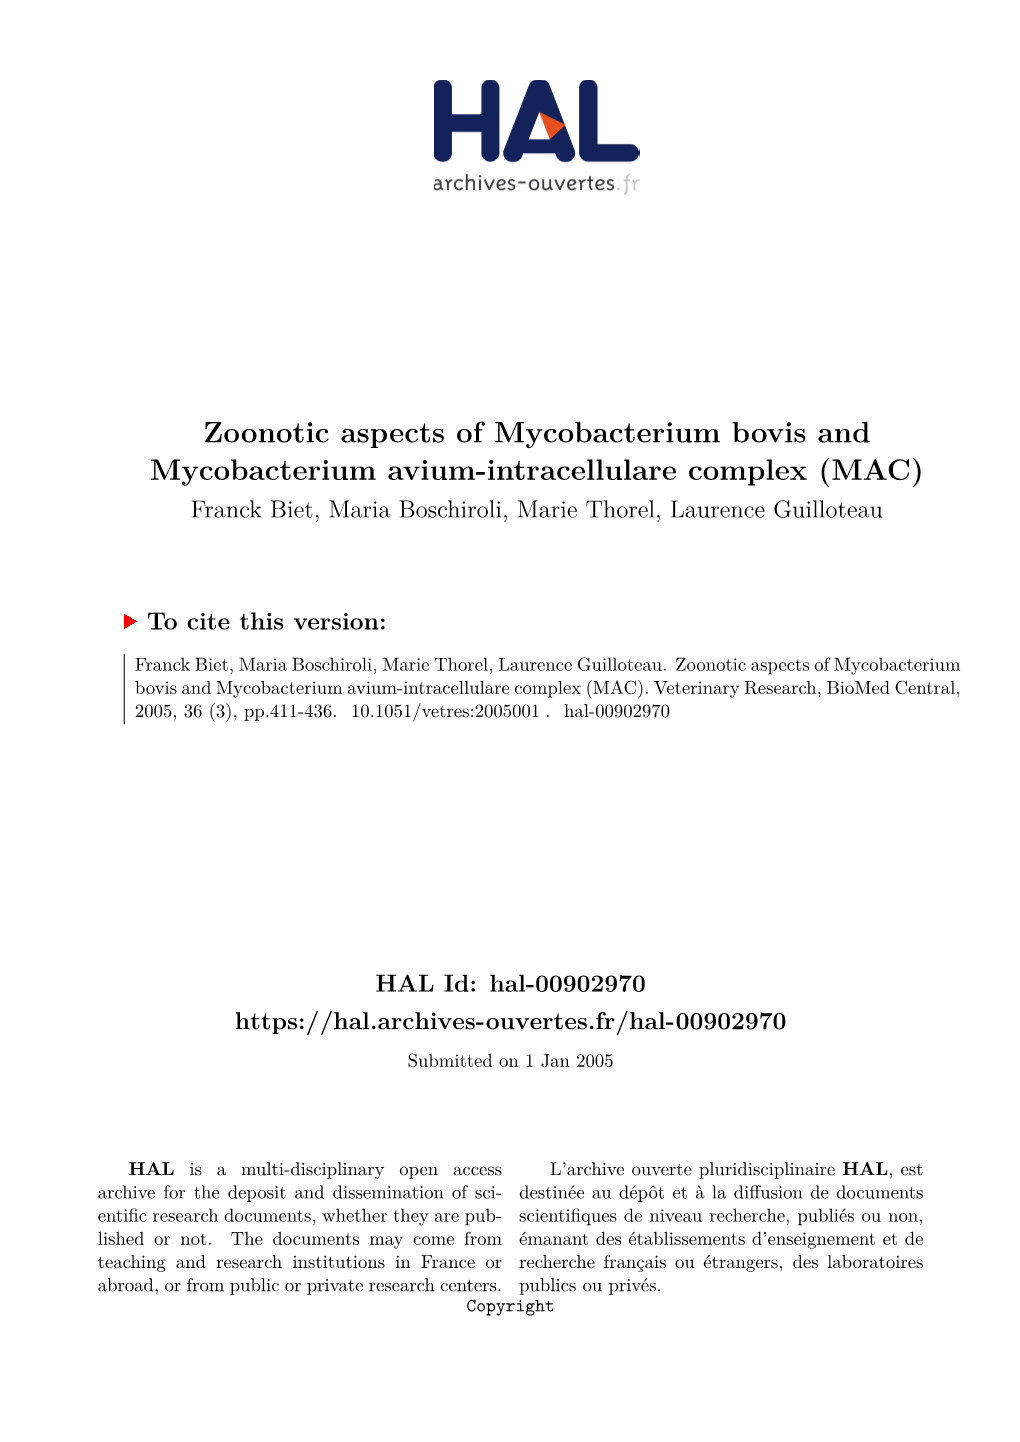 Zoonotic Aspects of Mycobacterium Bovis and Mycobacterium Avium-Intracellulare Complex (MAC) Franck Biet, Maria Boschiroli, Marie Thorel, Laurence Guilloteau